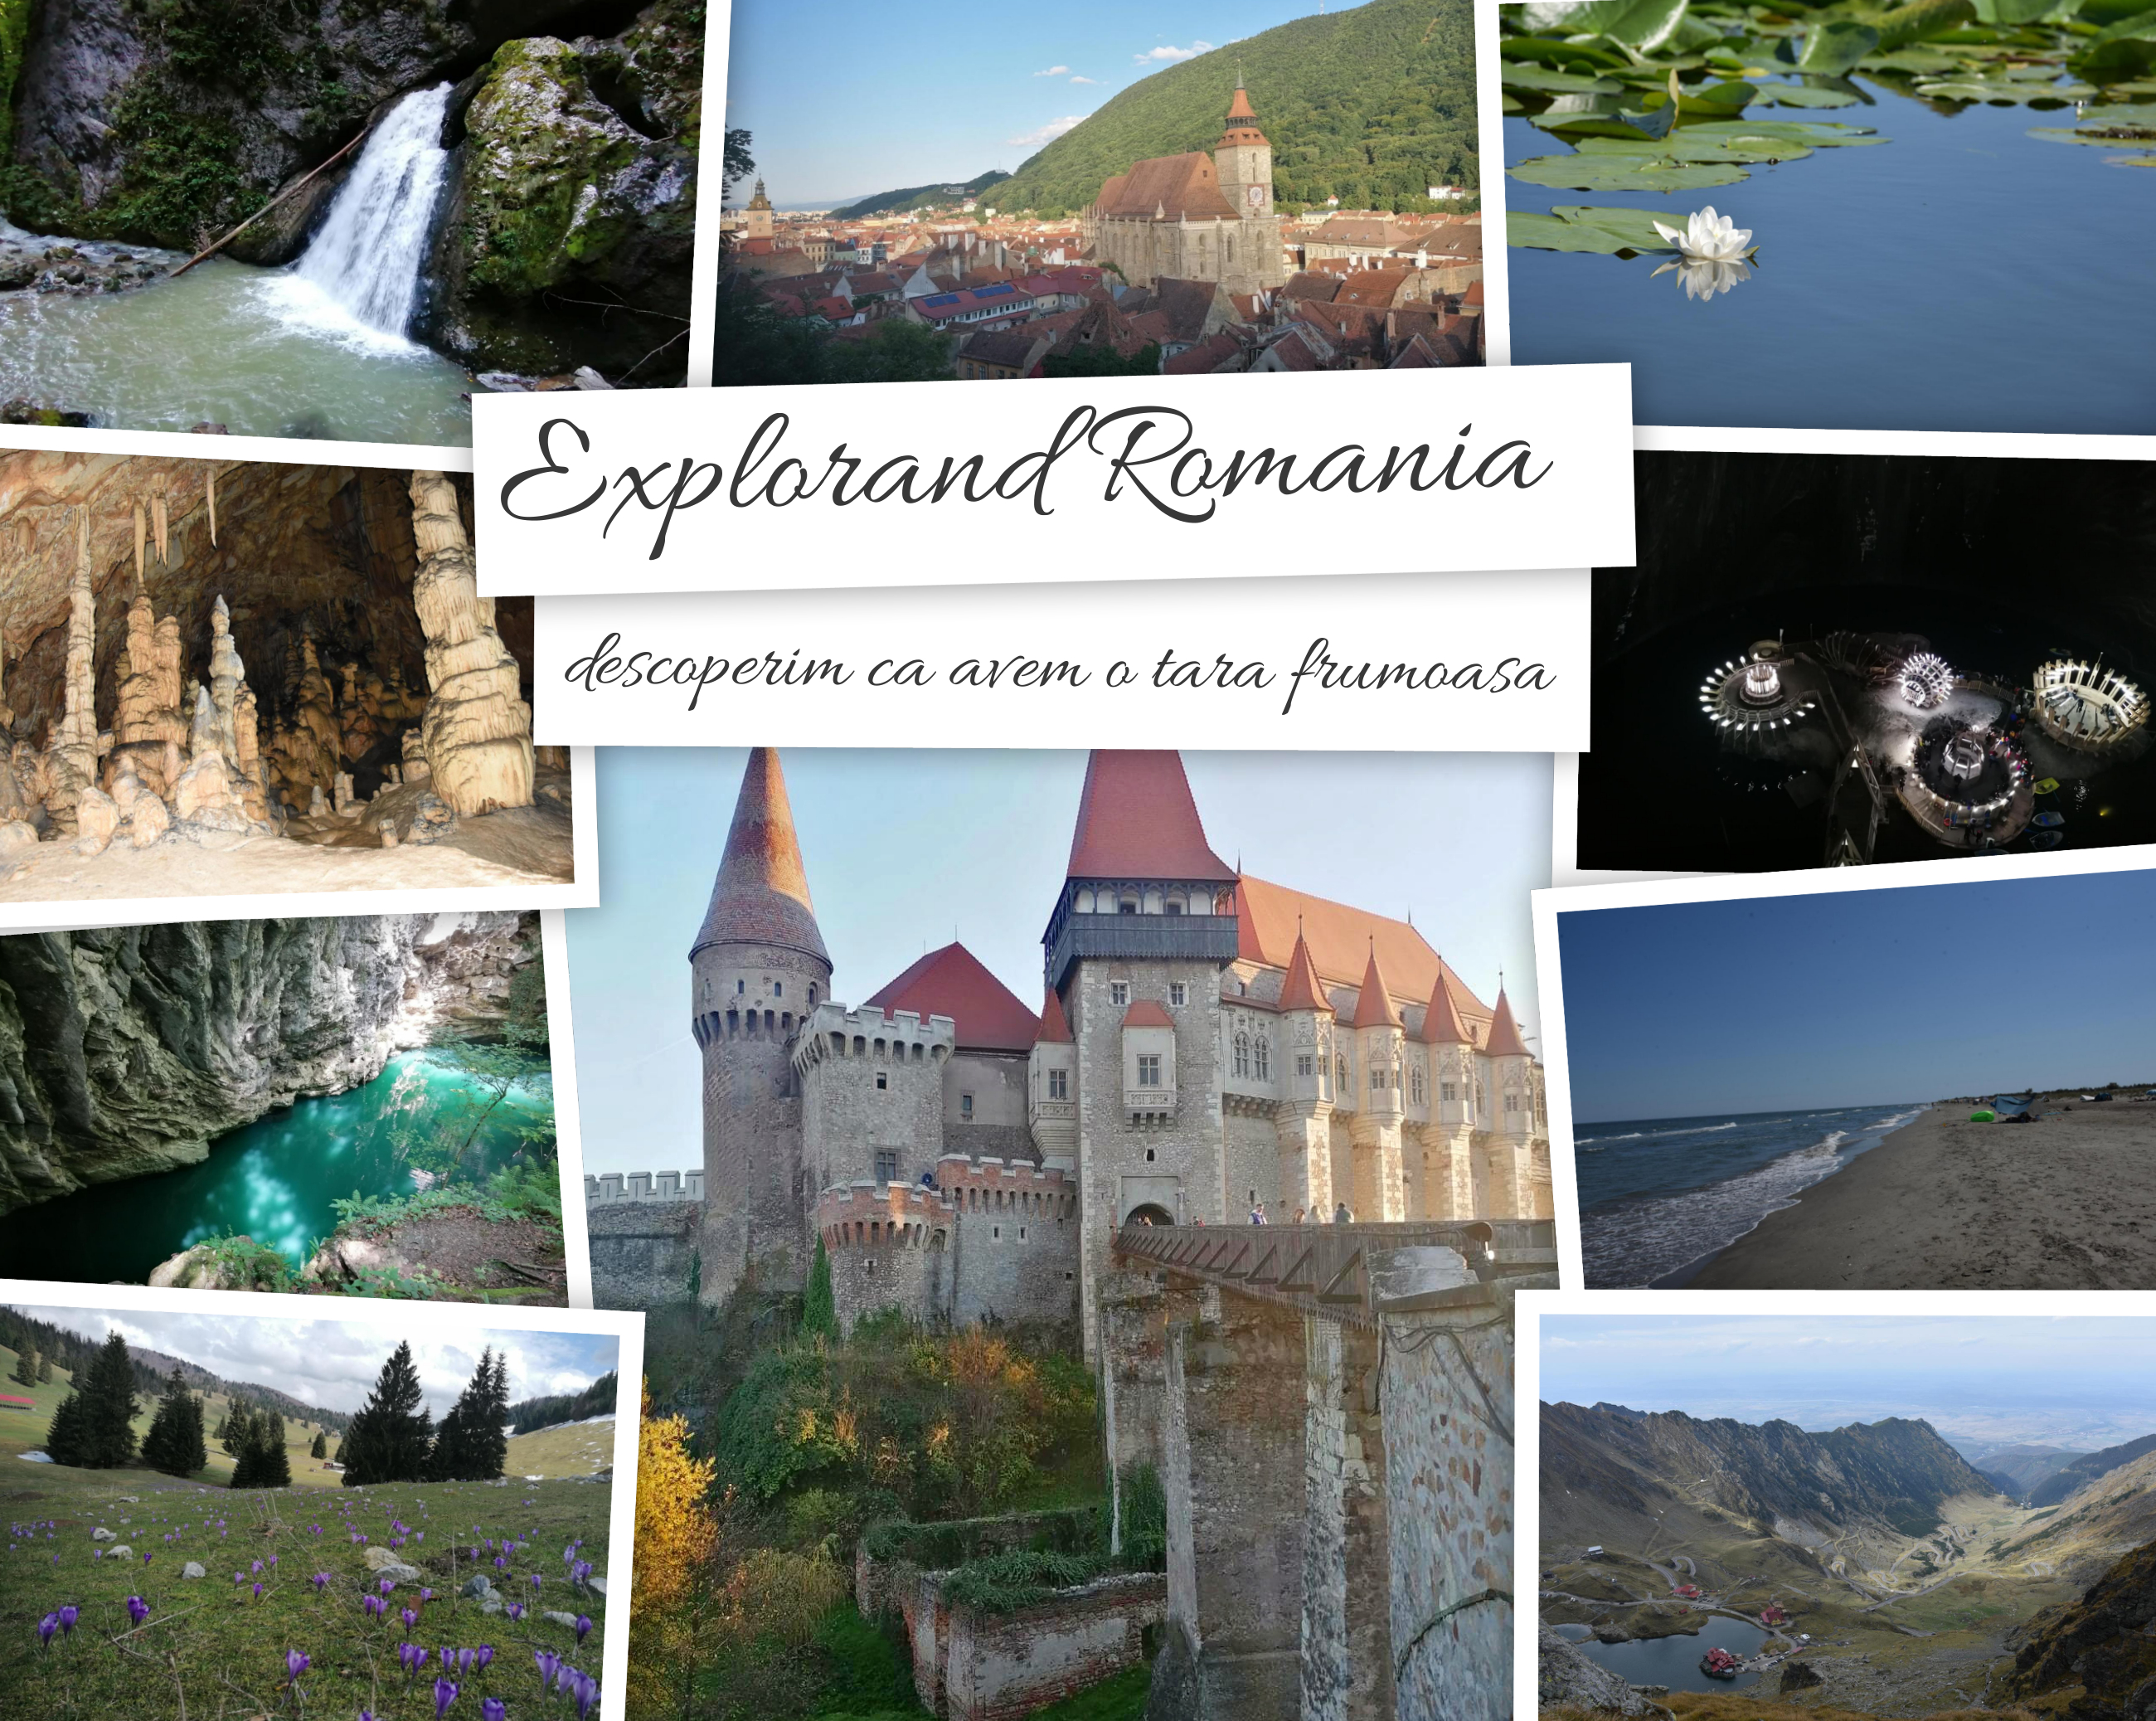 Explorand Romania